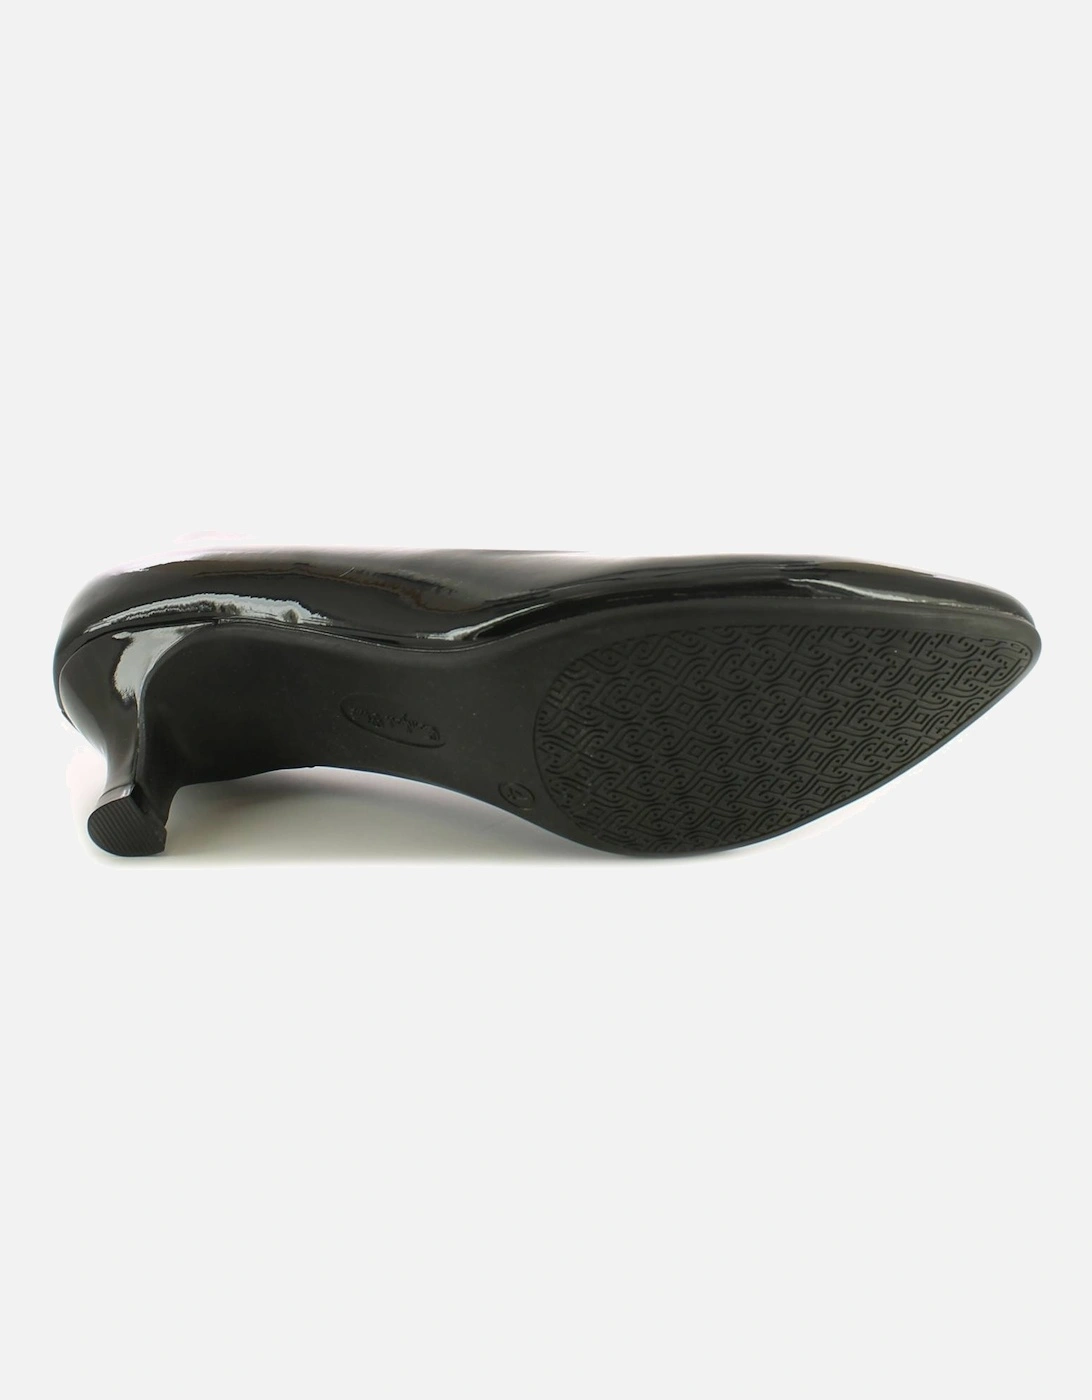 Womens Shoes Court Texas Slip On black patent UK Size